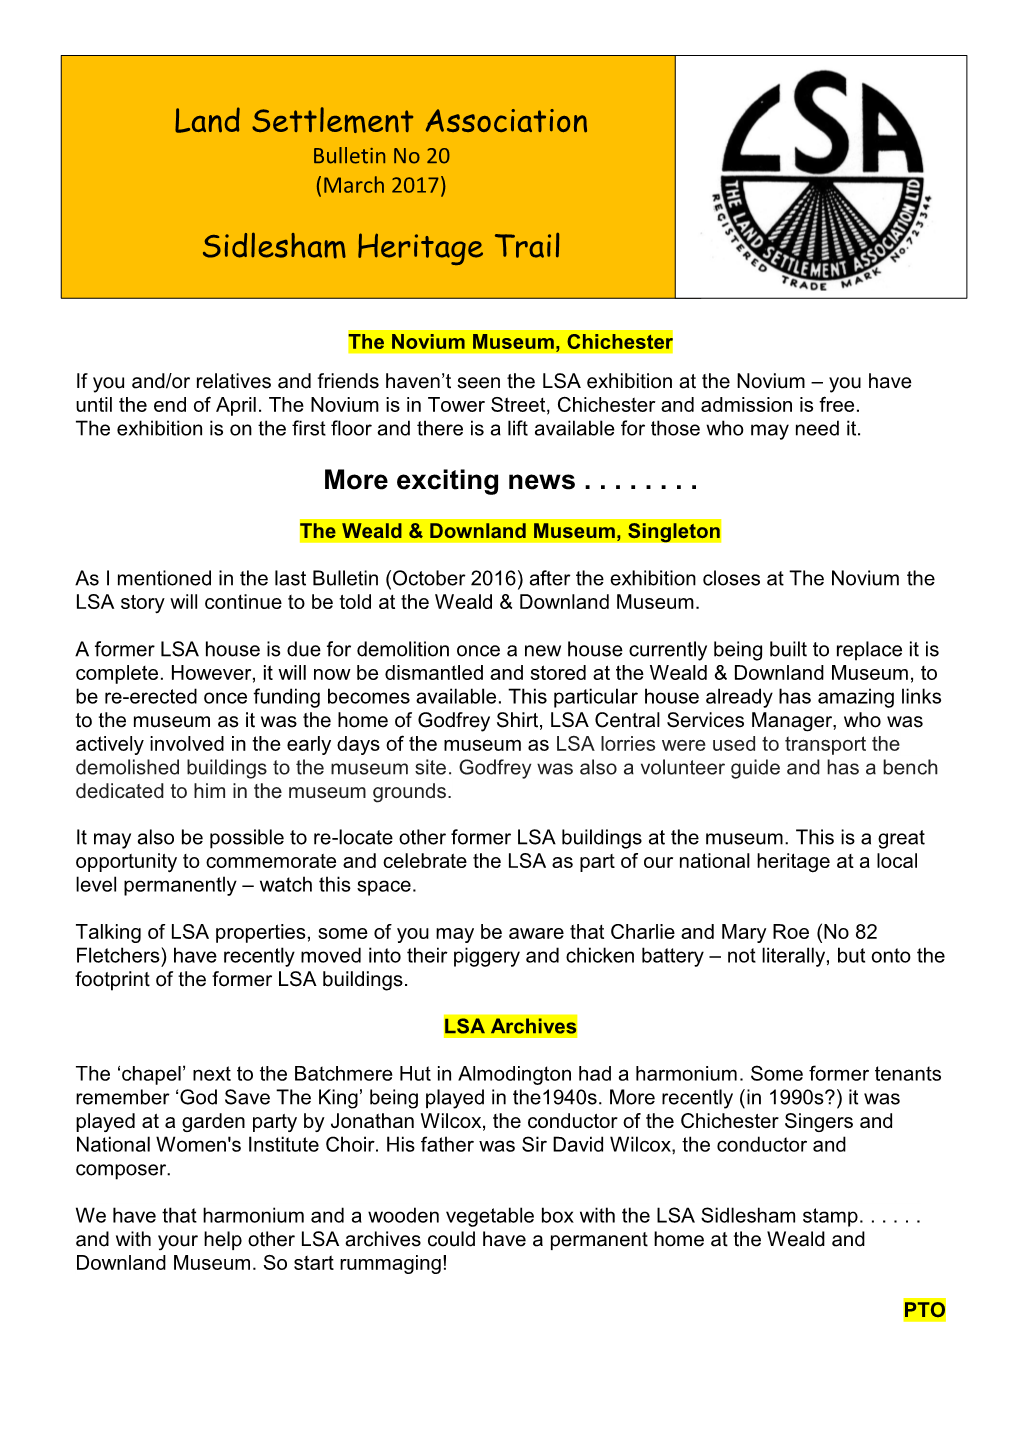 Land Settlement Association Sidlesham Heritage Trail